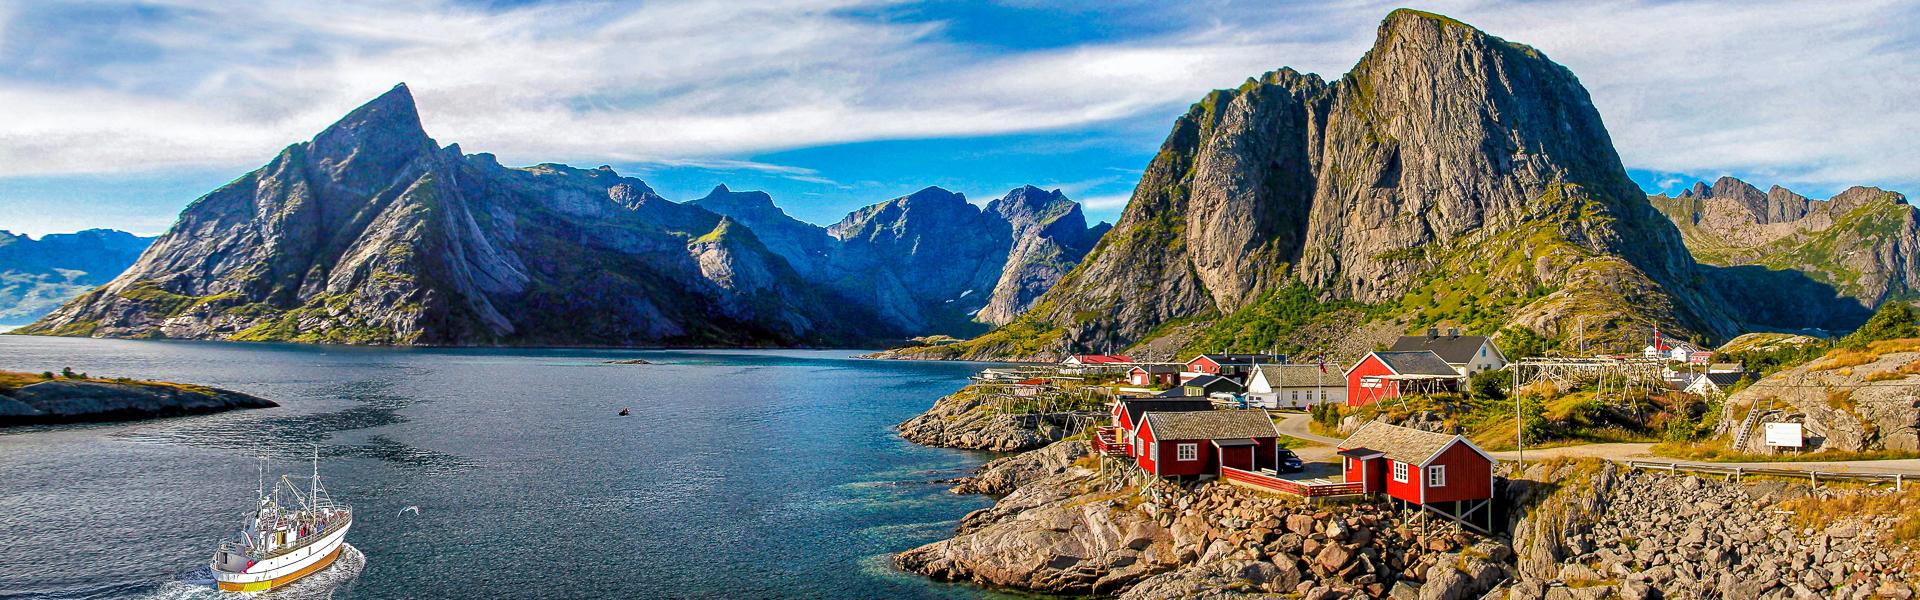 Inselwelt der Lofoten |  Christian Klein, Pixabay / Chamleon